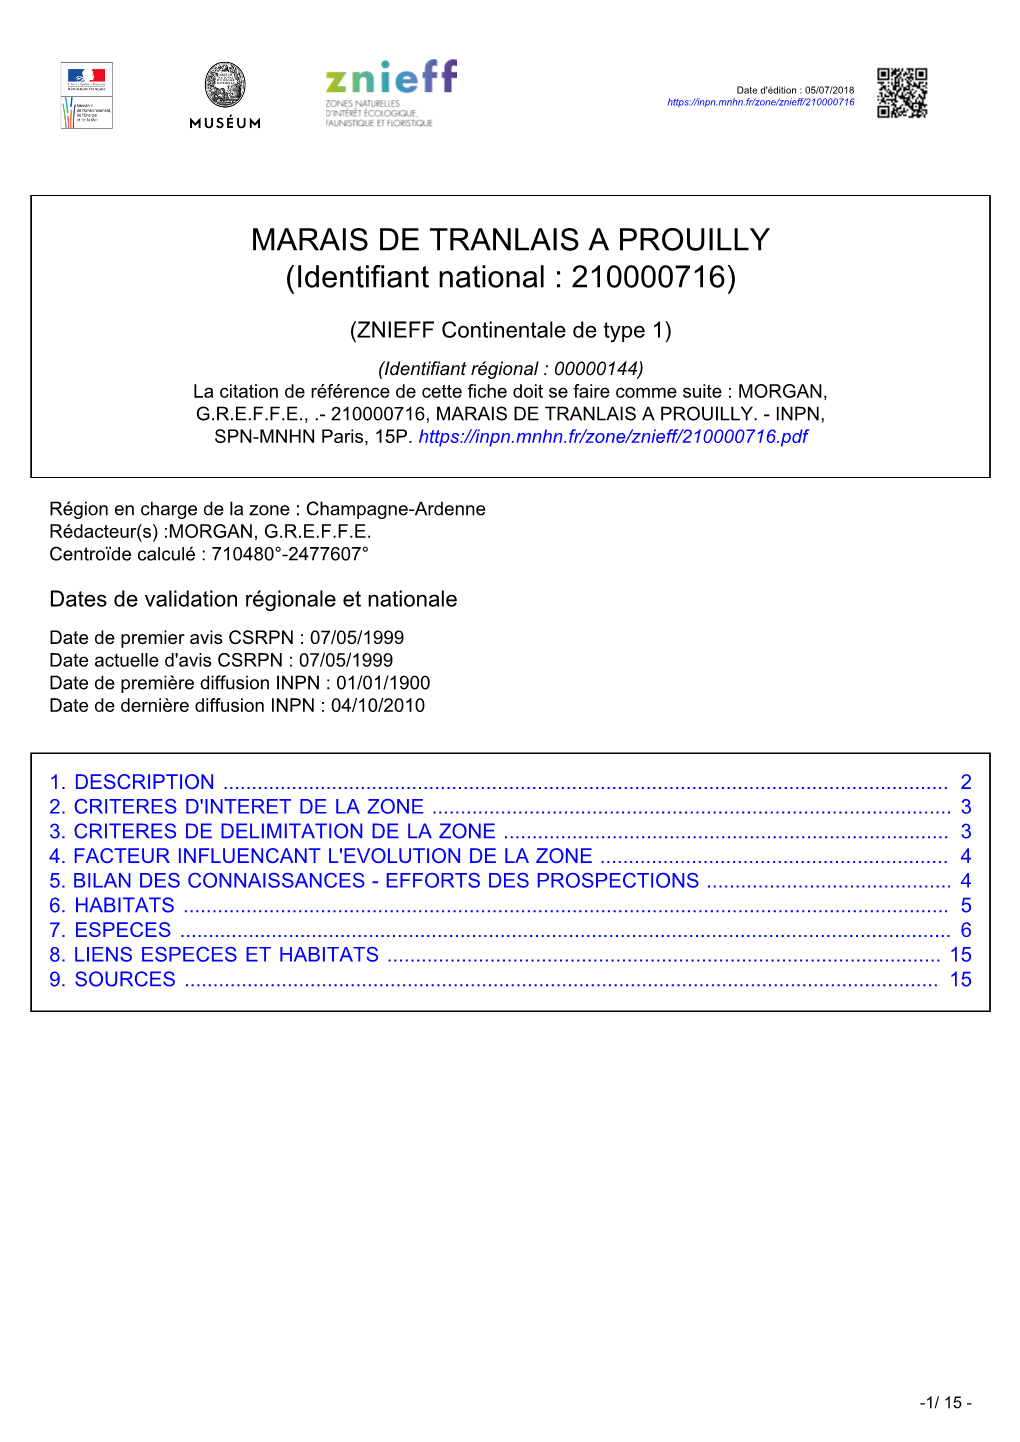 MARAIS DE TRANLAIS a PROUILLY (Identifiant National : 210000716)